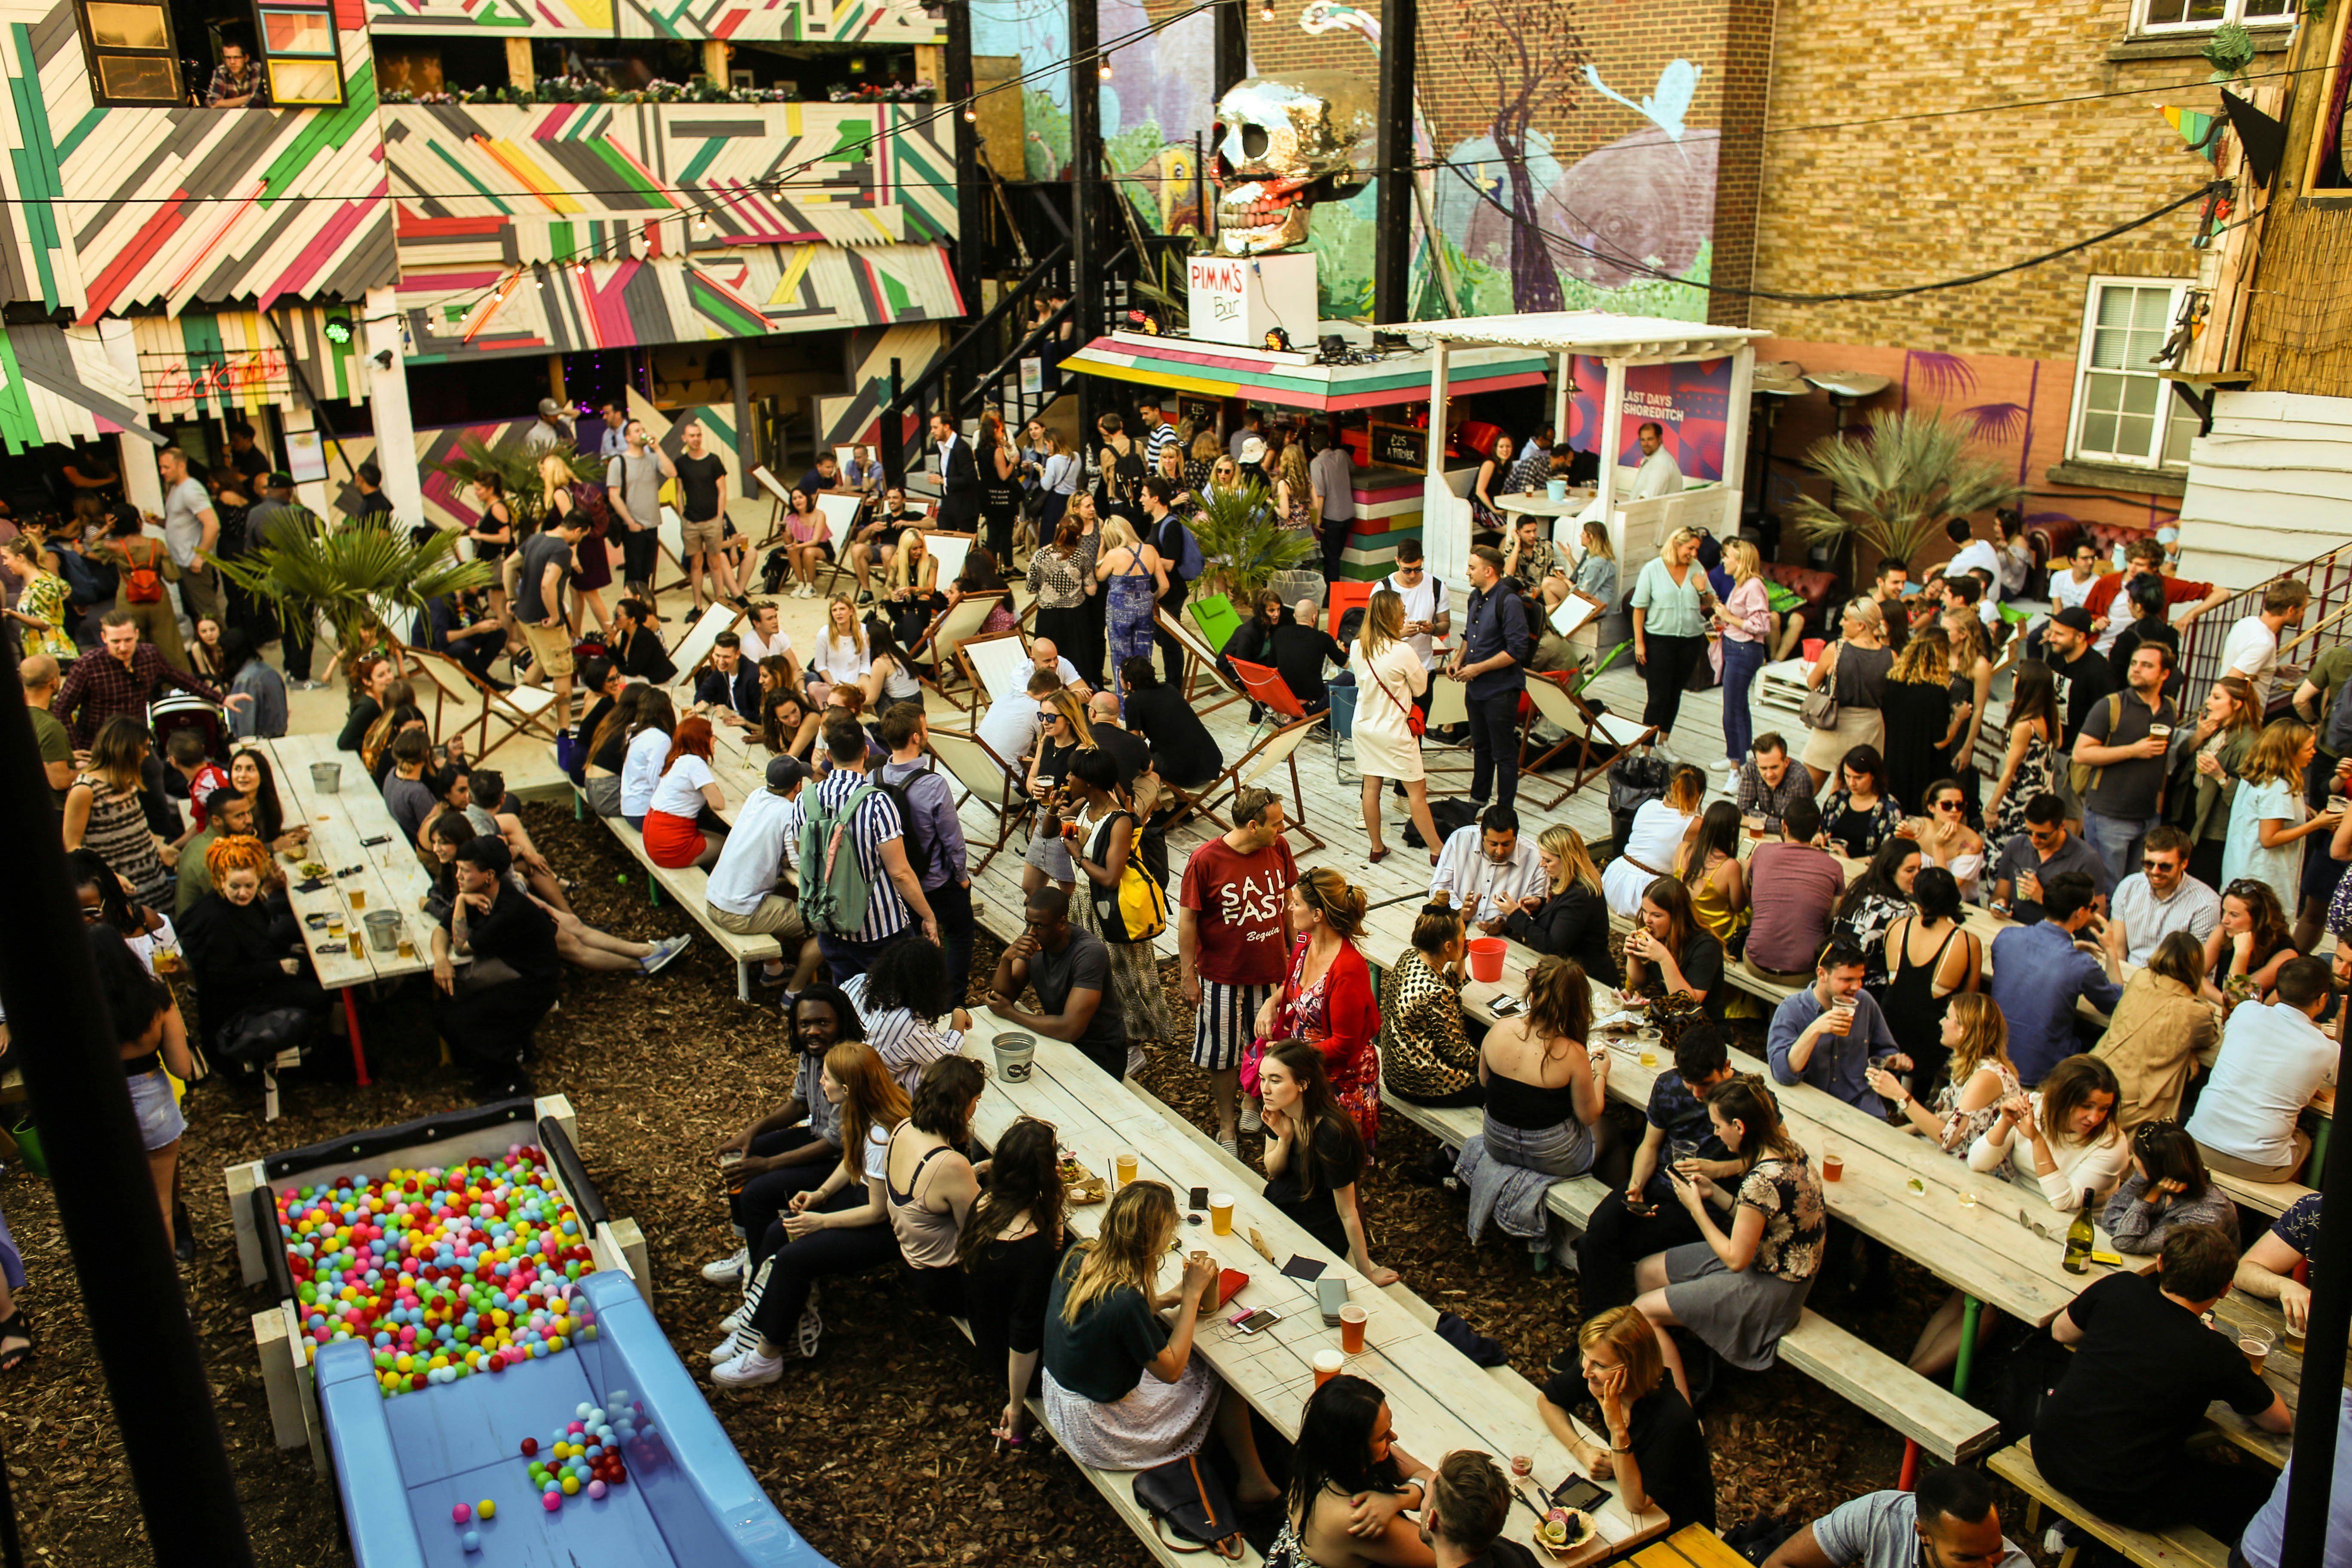 An English Oktoberfest will take place in the Last Days of Shoreditch. Image: Shoreditch Oktoberfest